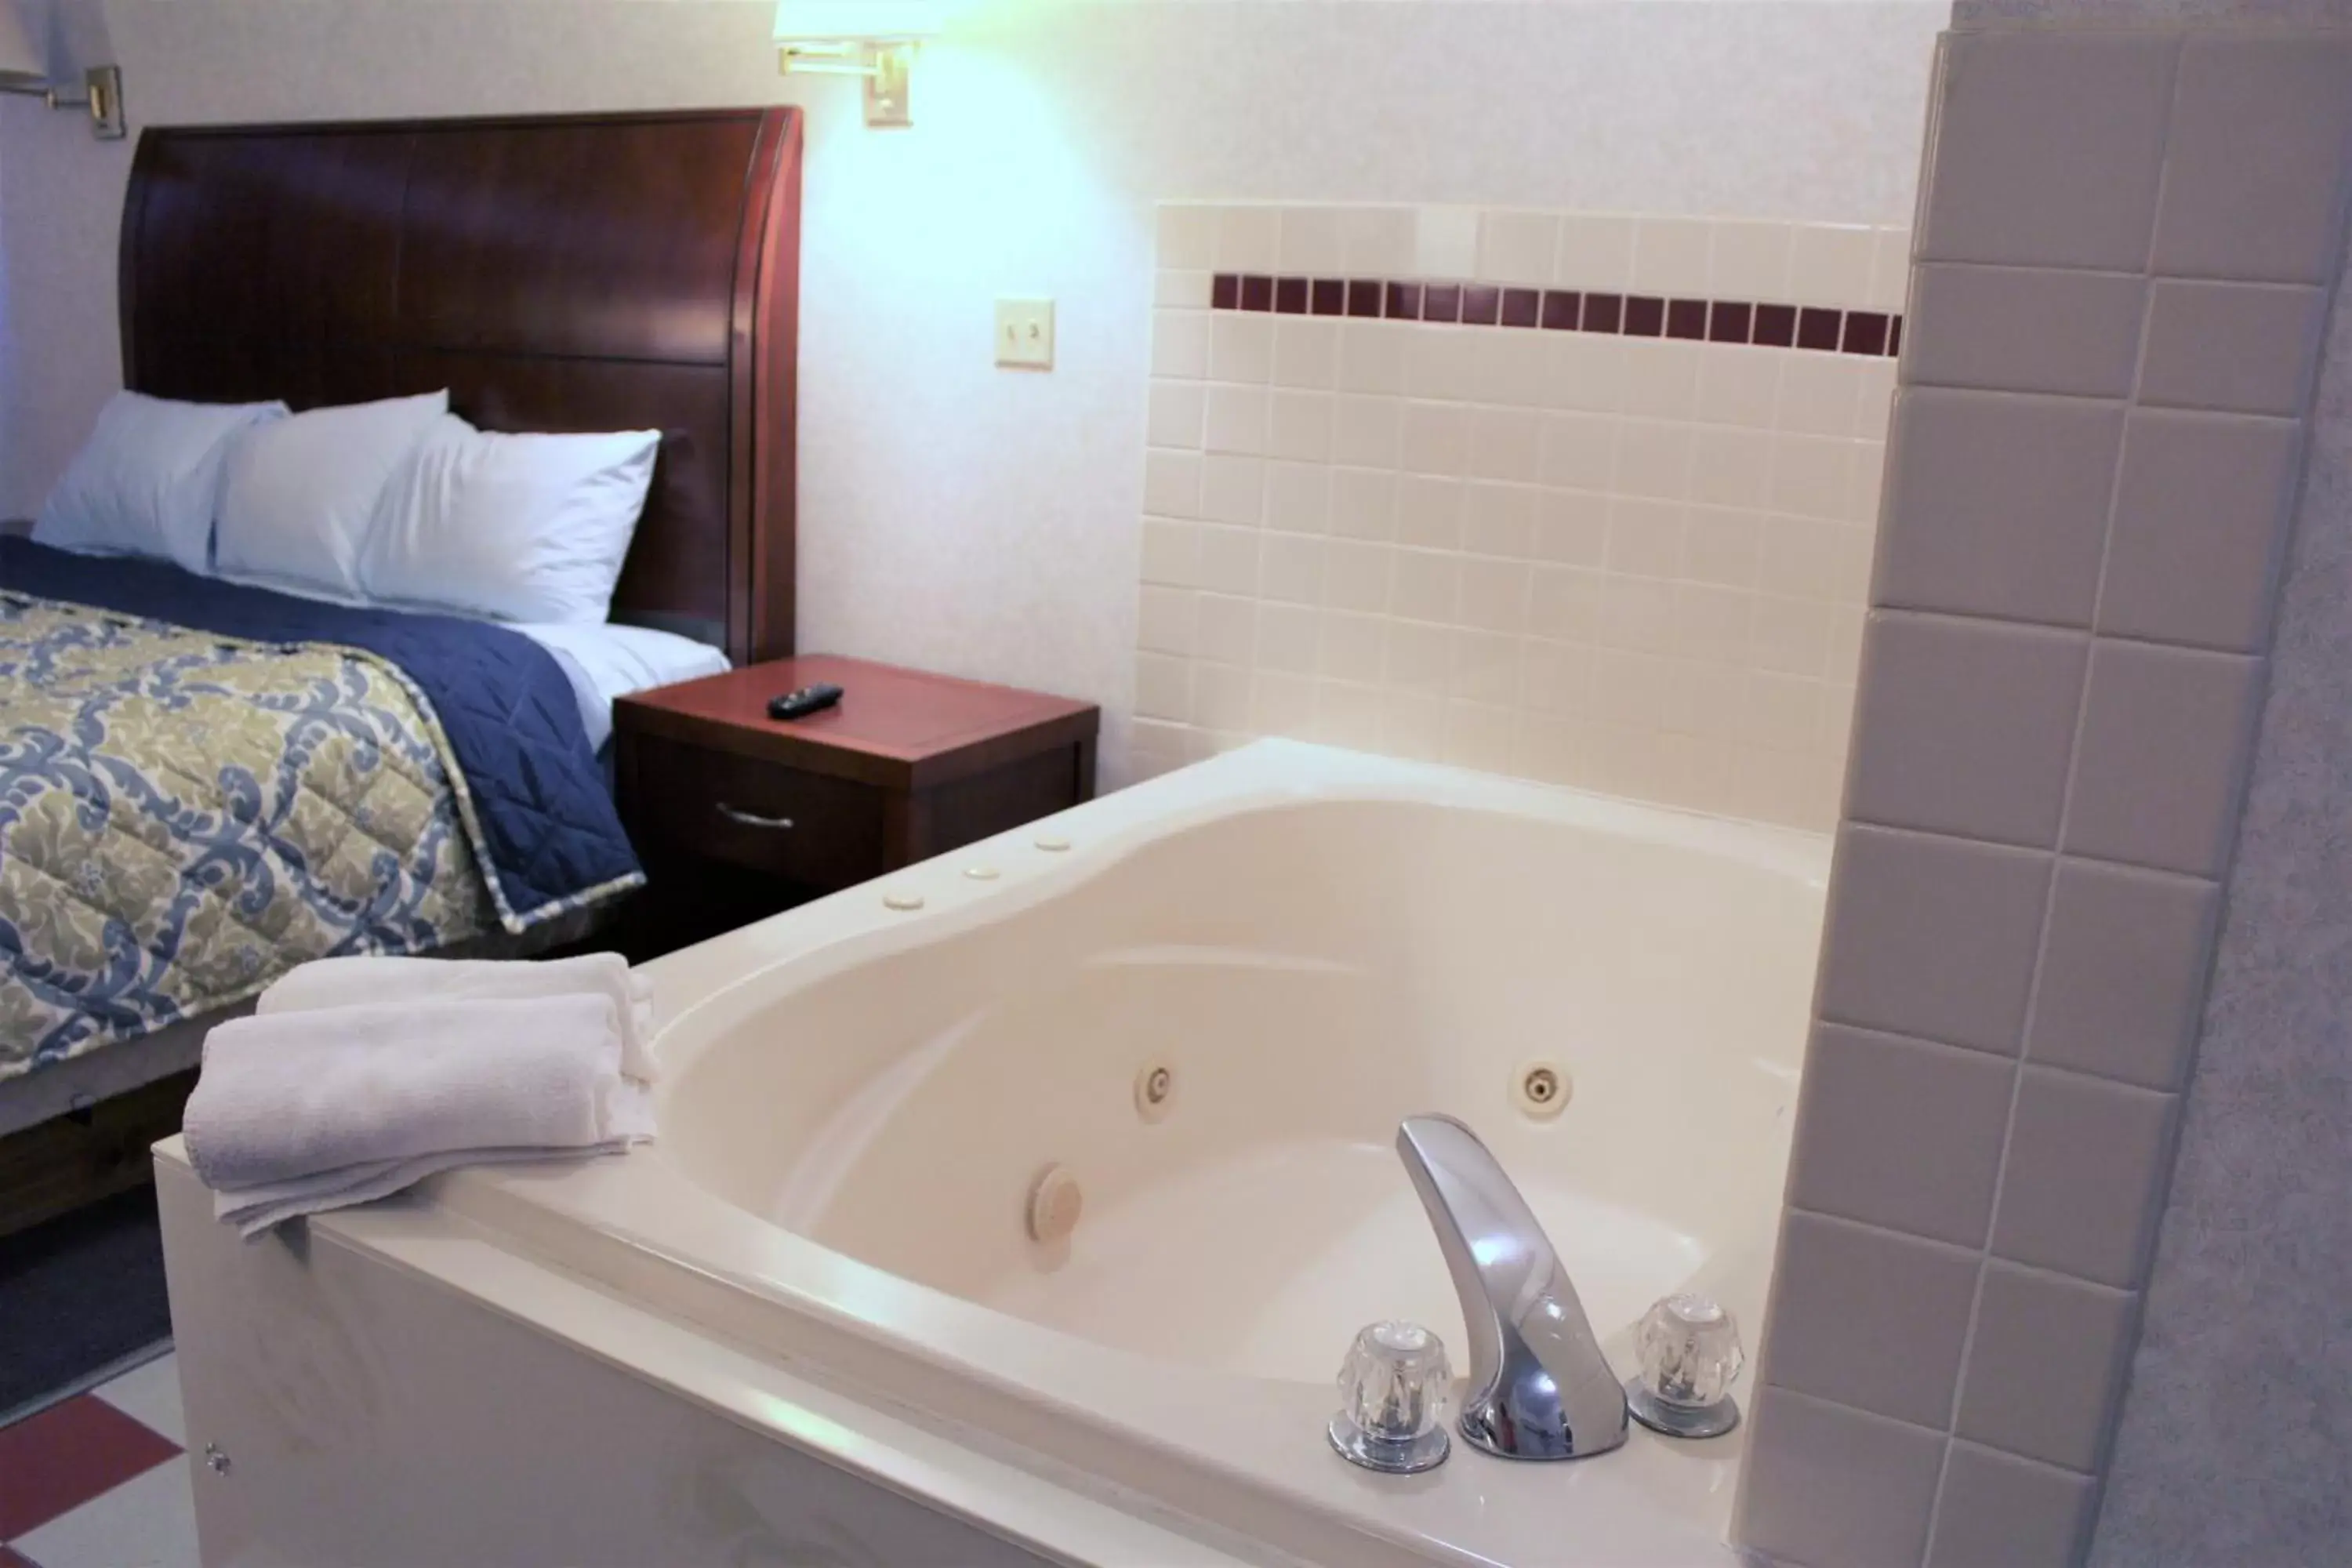 Hot Tub, Bathroom in Americas Best Value Inn Decatur, IN